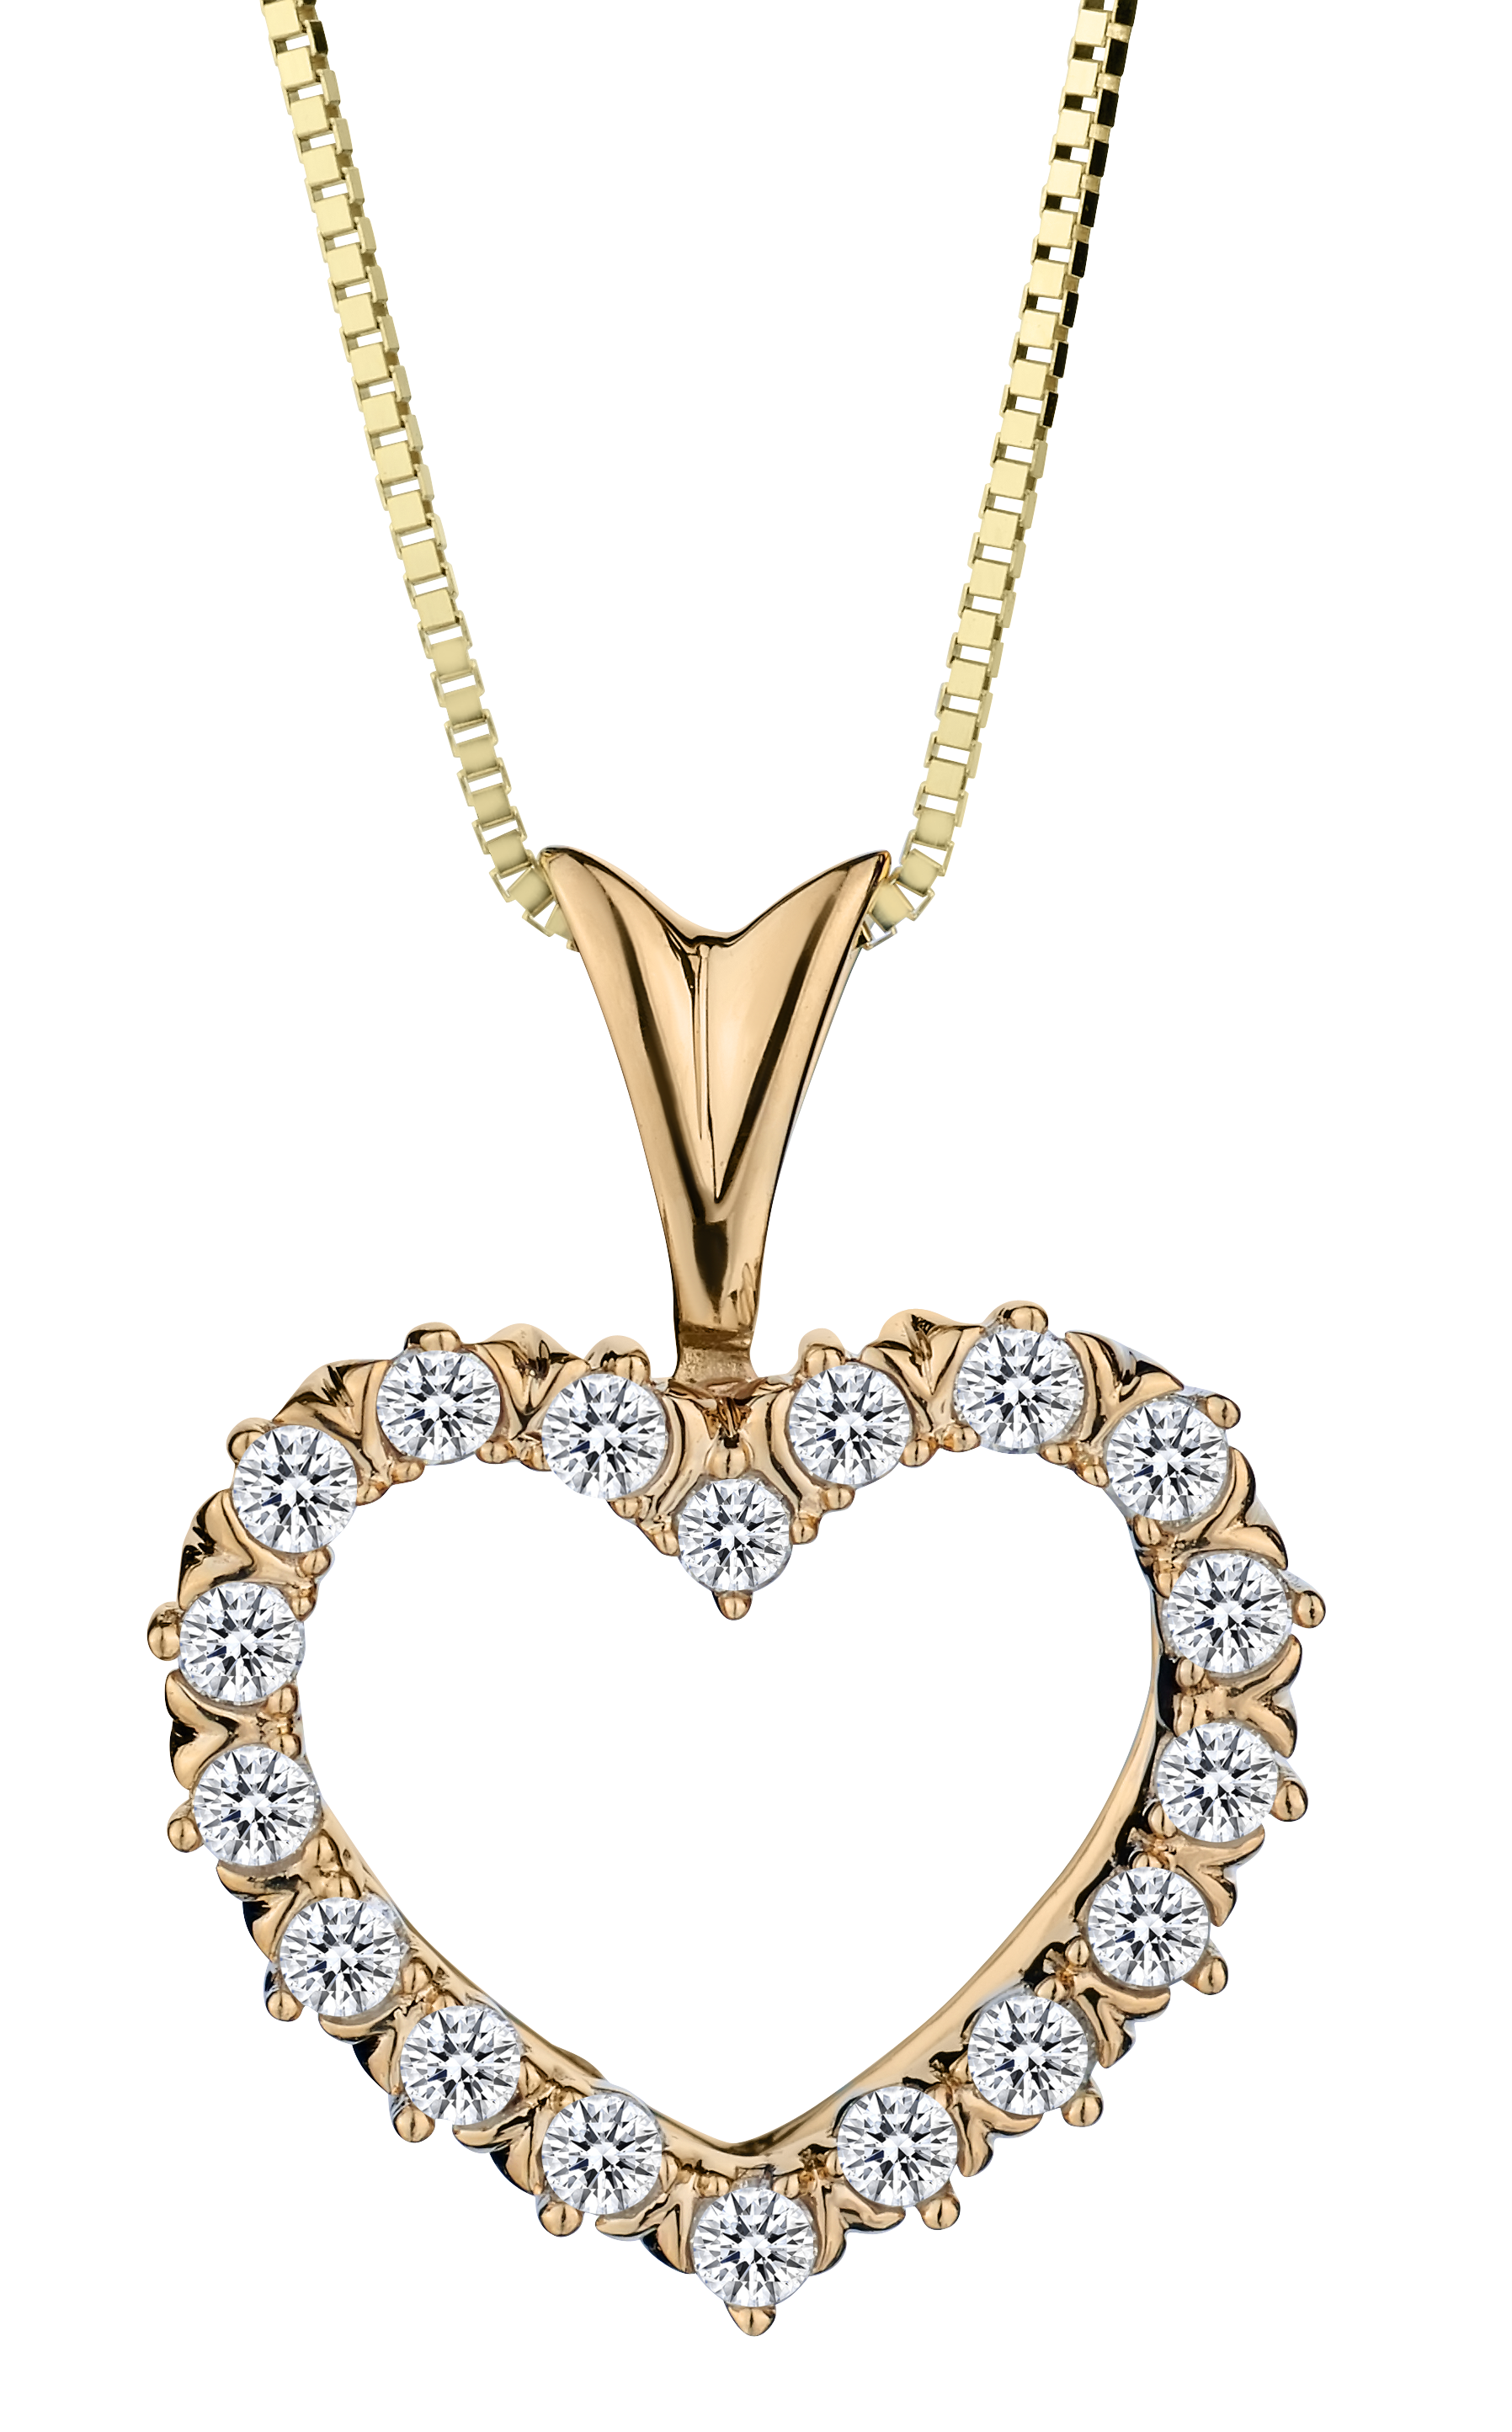 .25 Carat of Diamonds Heart Pendant, 10k Yellow Gold.....................NOW